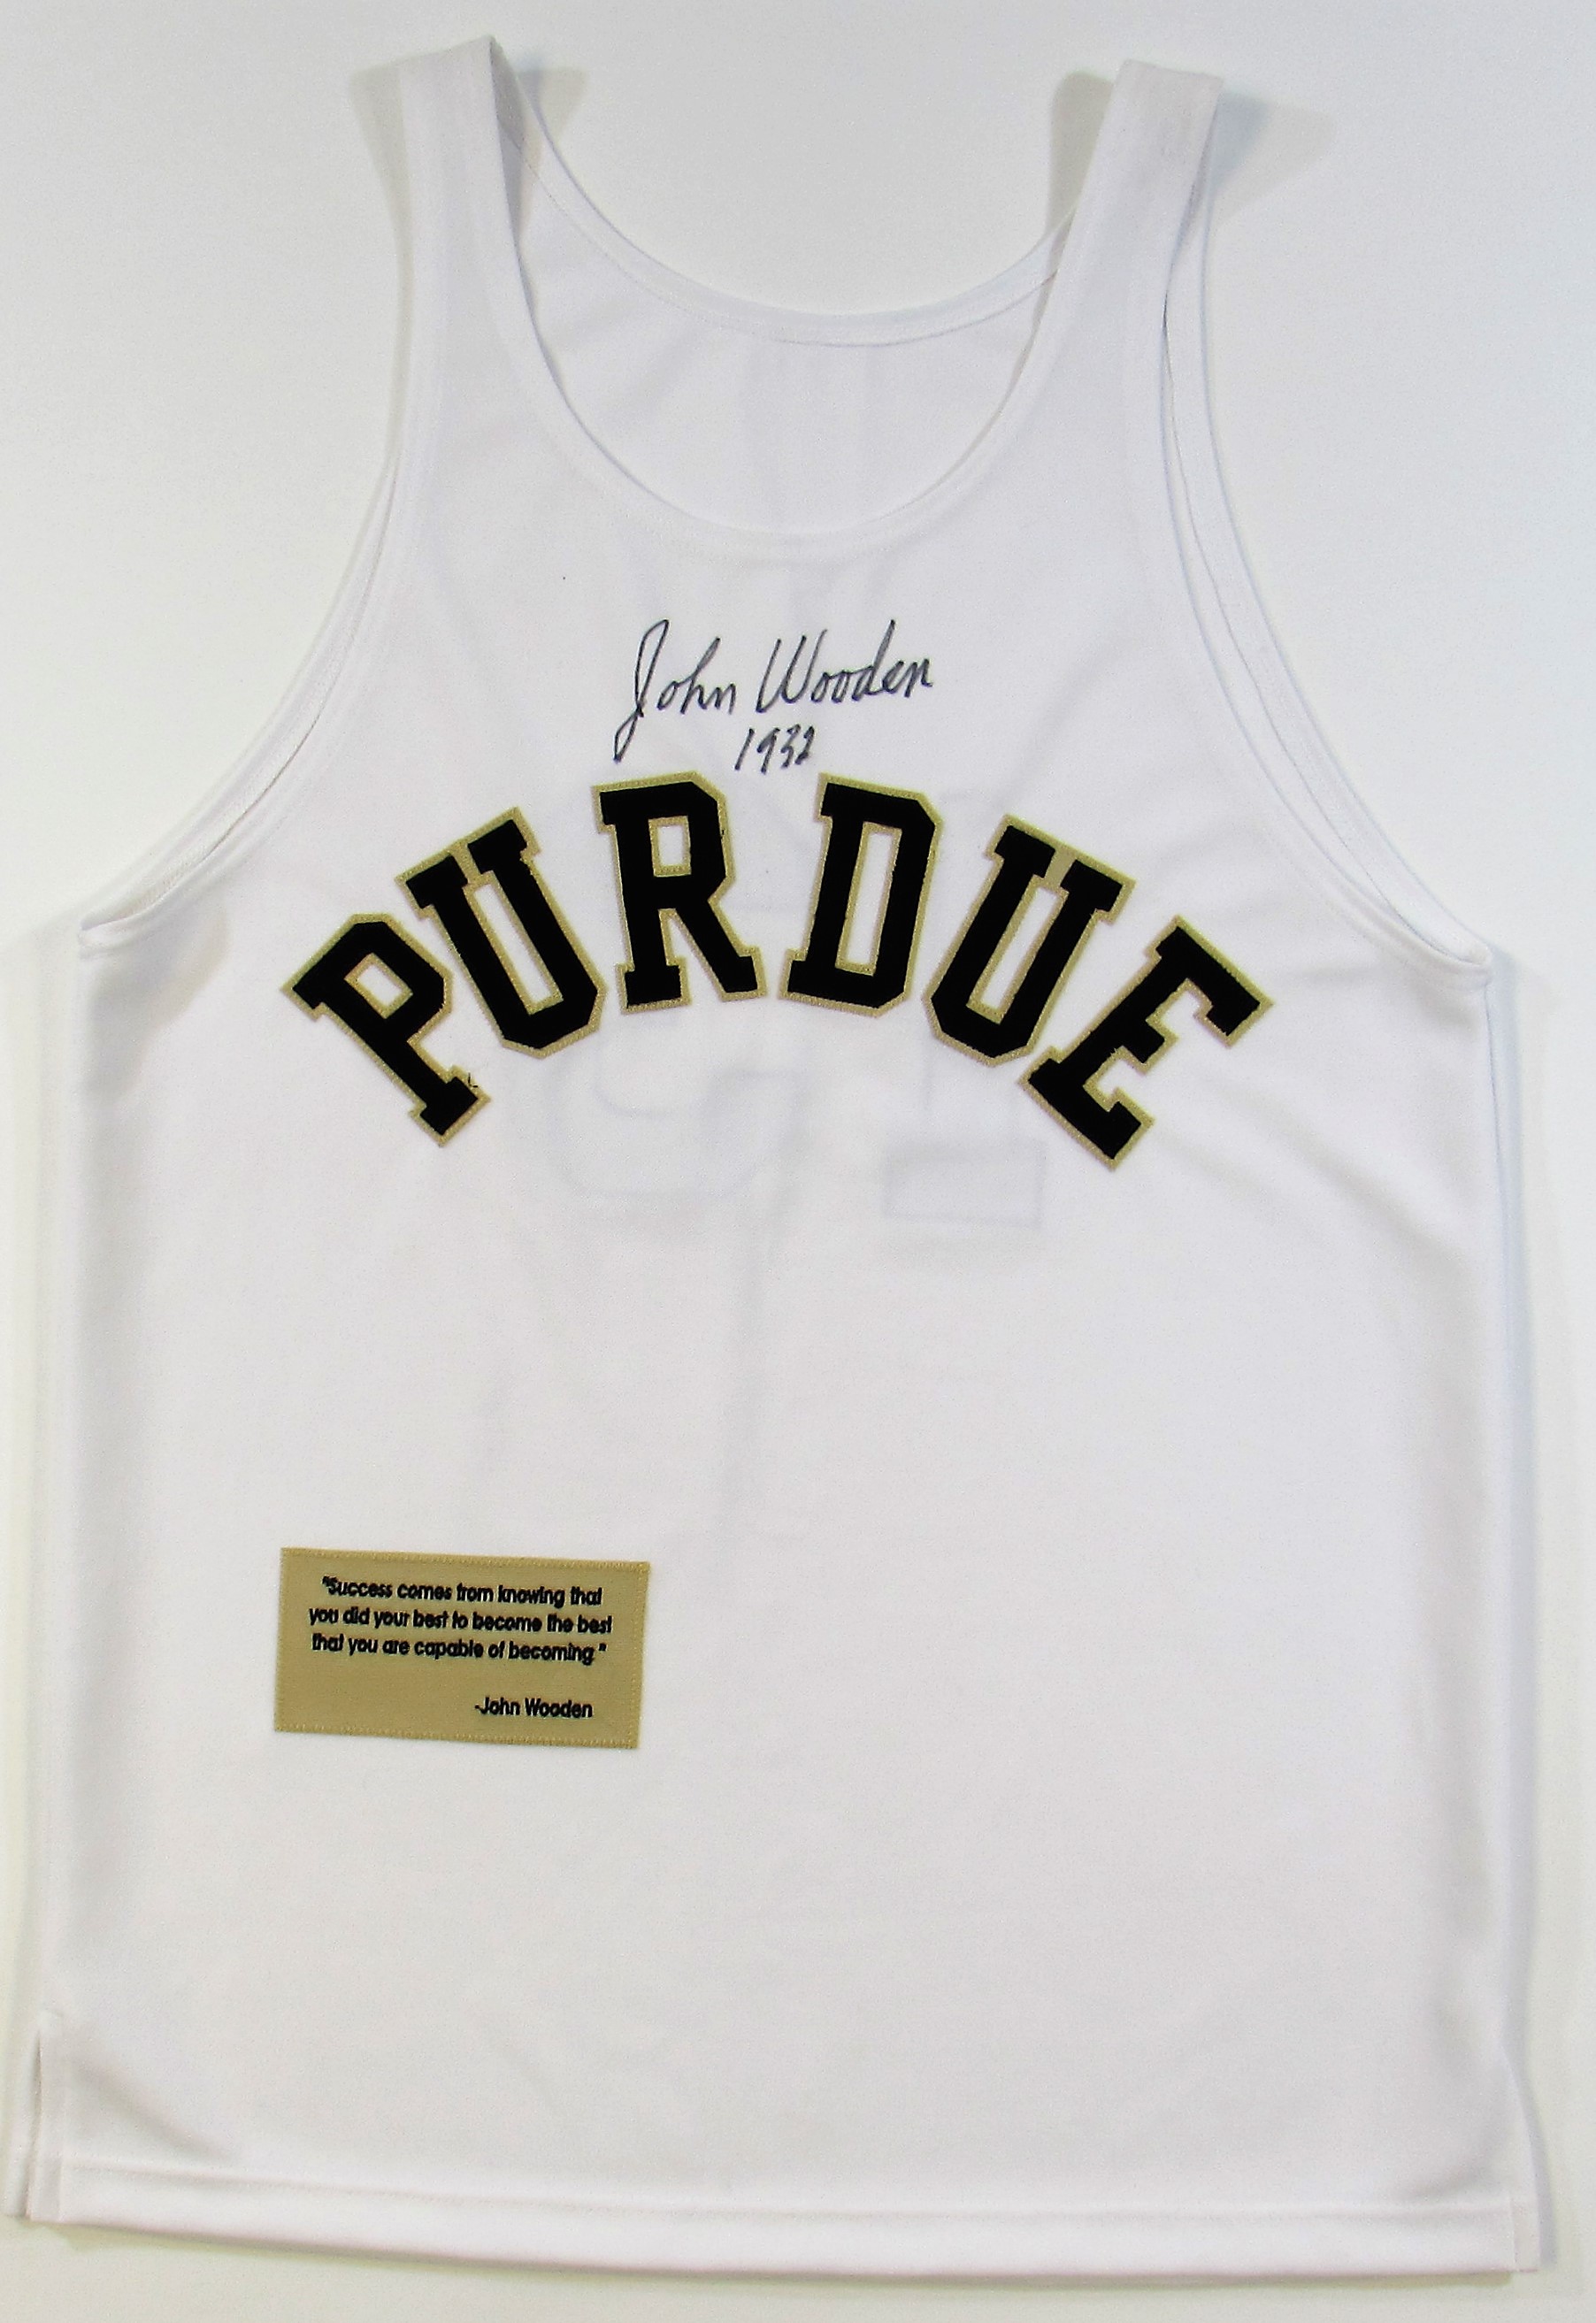 John Wooden Signed Purdue University 